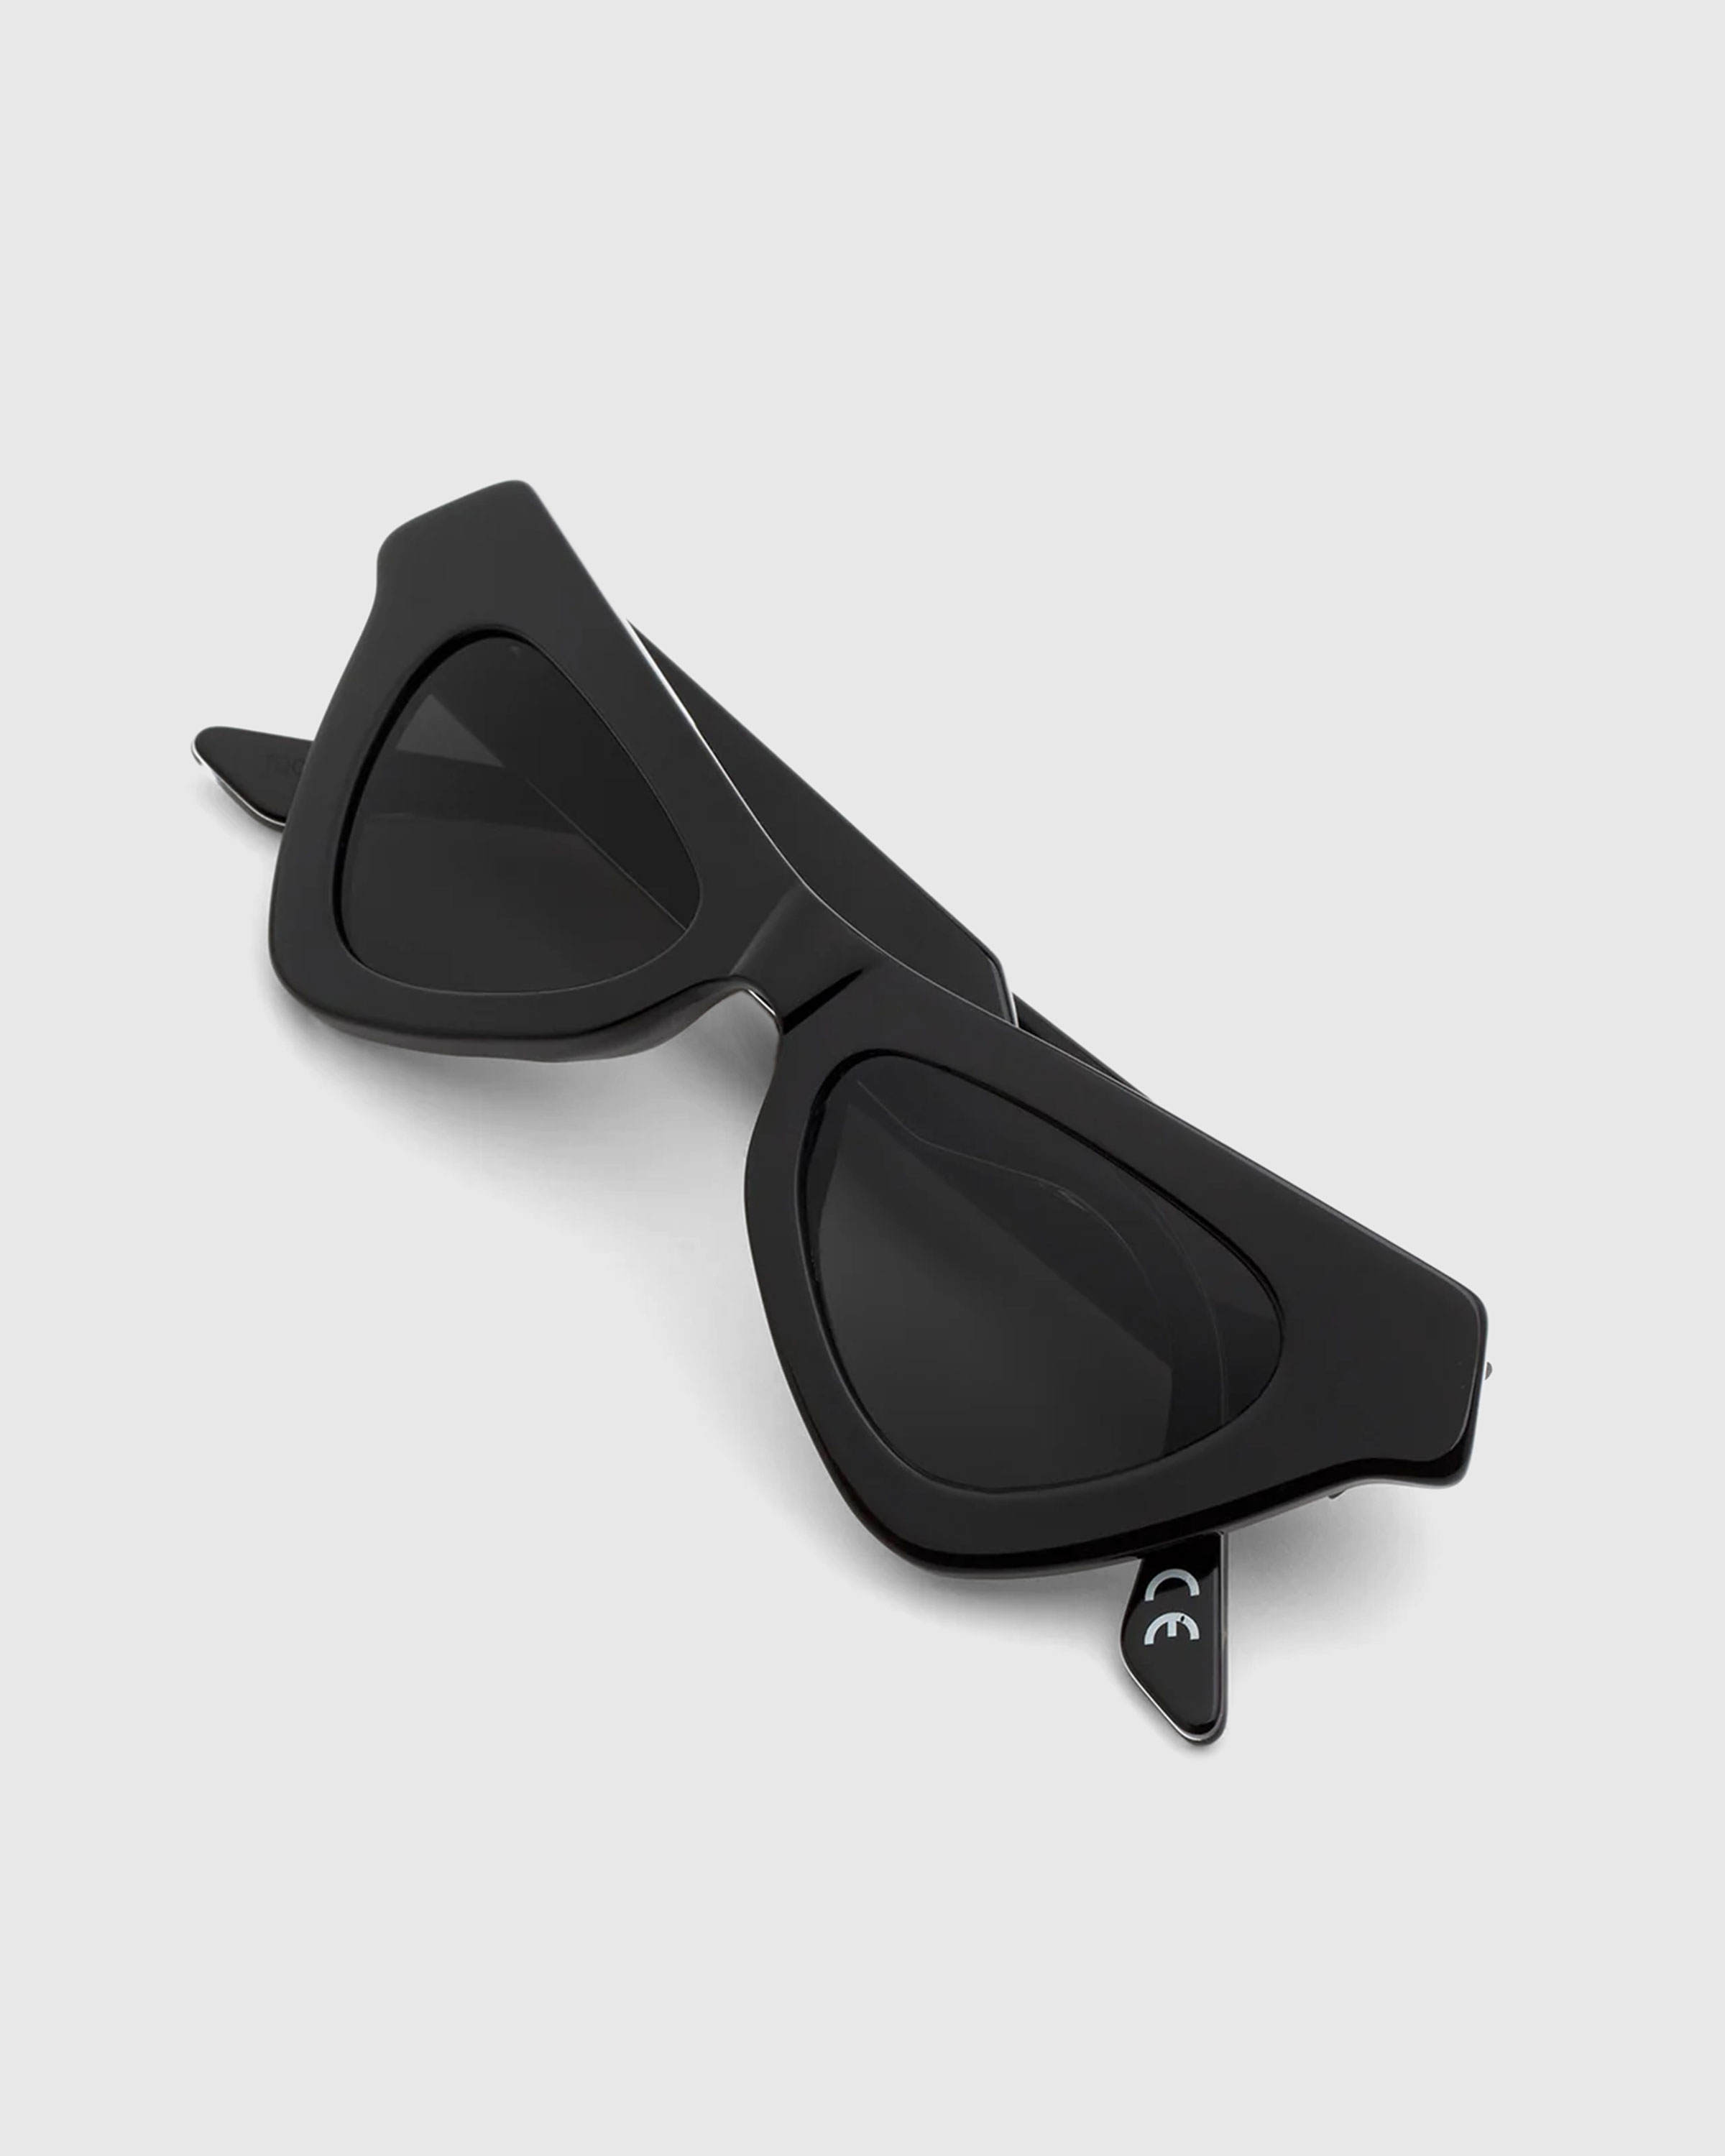 Marni x retrosuperfuture – Fairy Pools Black - Sunglasses - Black - Image 4